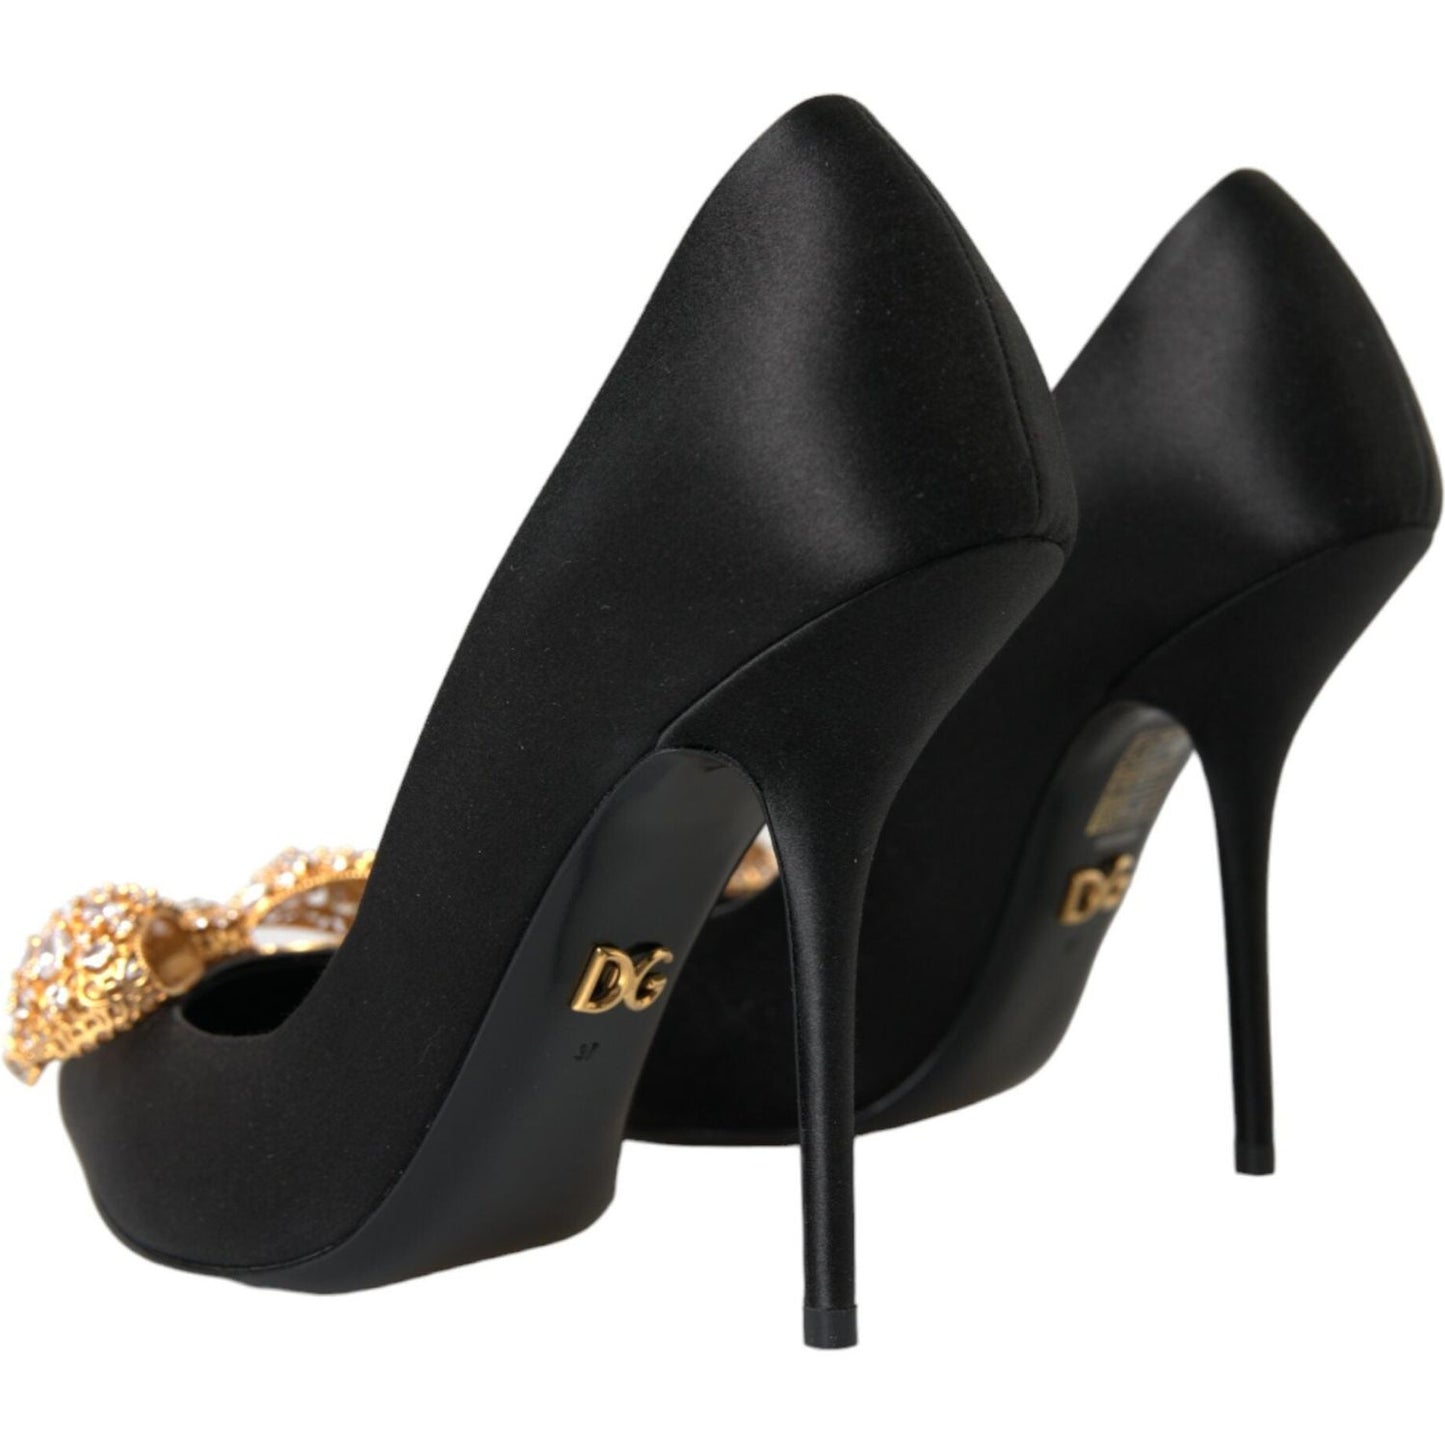 Dolce & Gabbana Black Satin Bow Crystal Heels Pumps Shoes black-satin-bow-crystal-heels-pumps-shoes